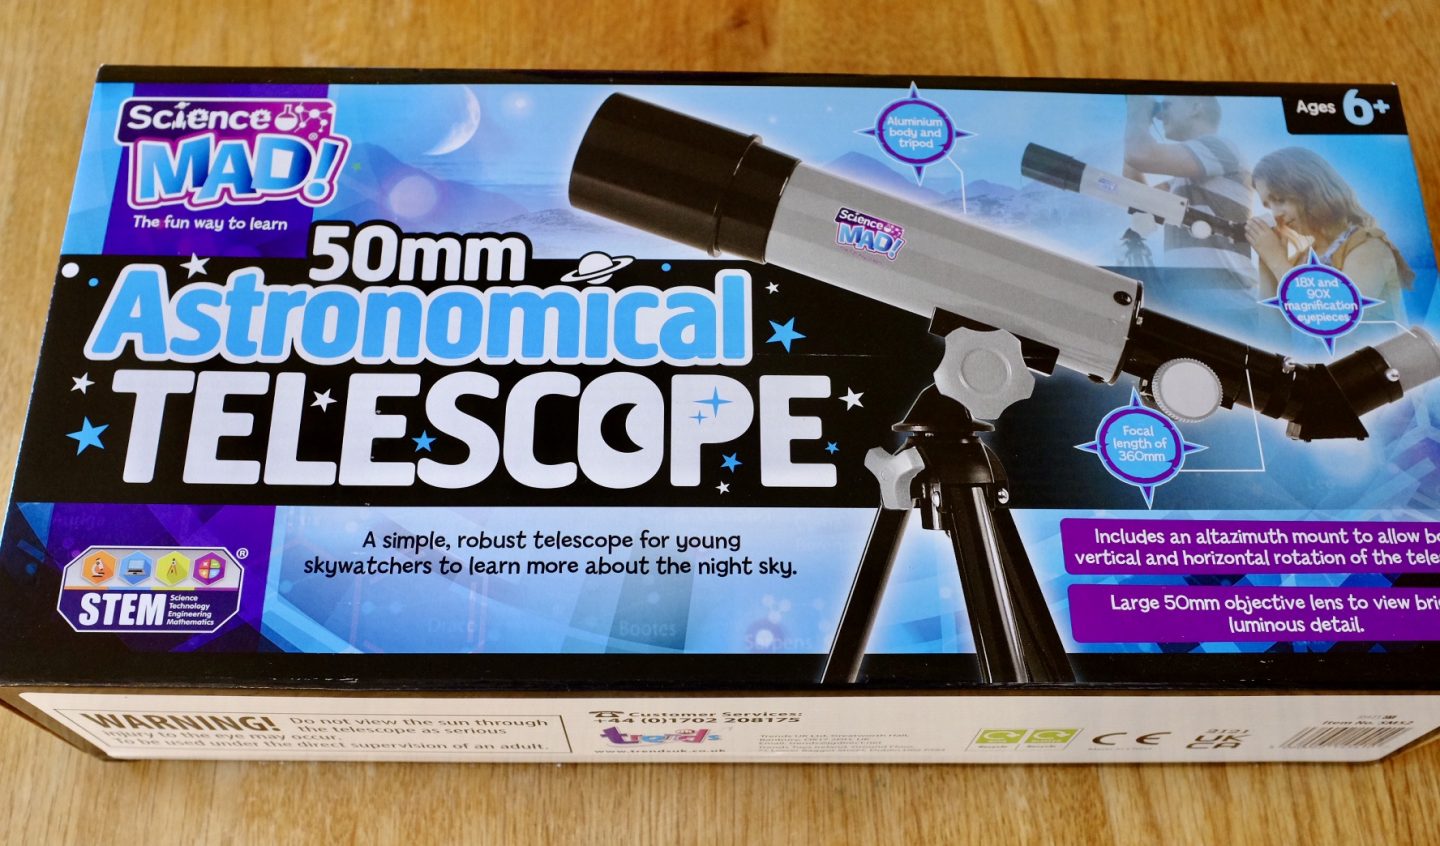 Science Mad! 50mm telescope